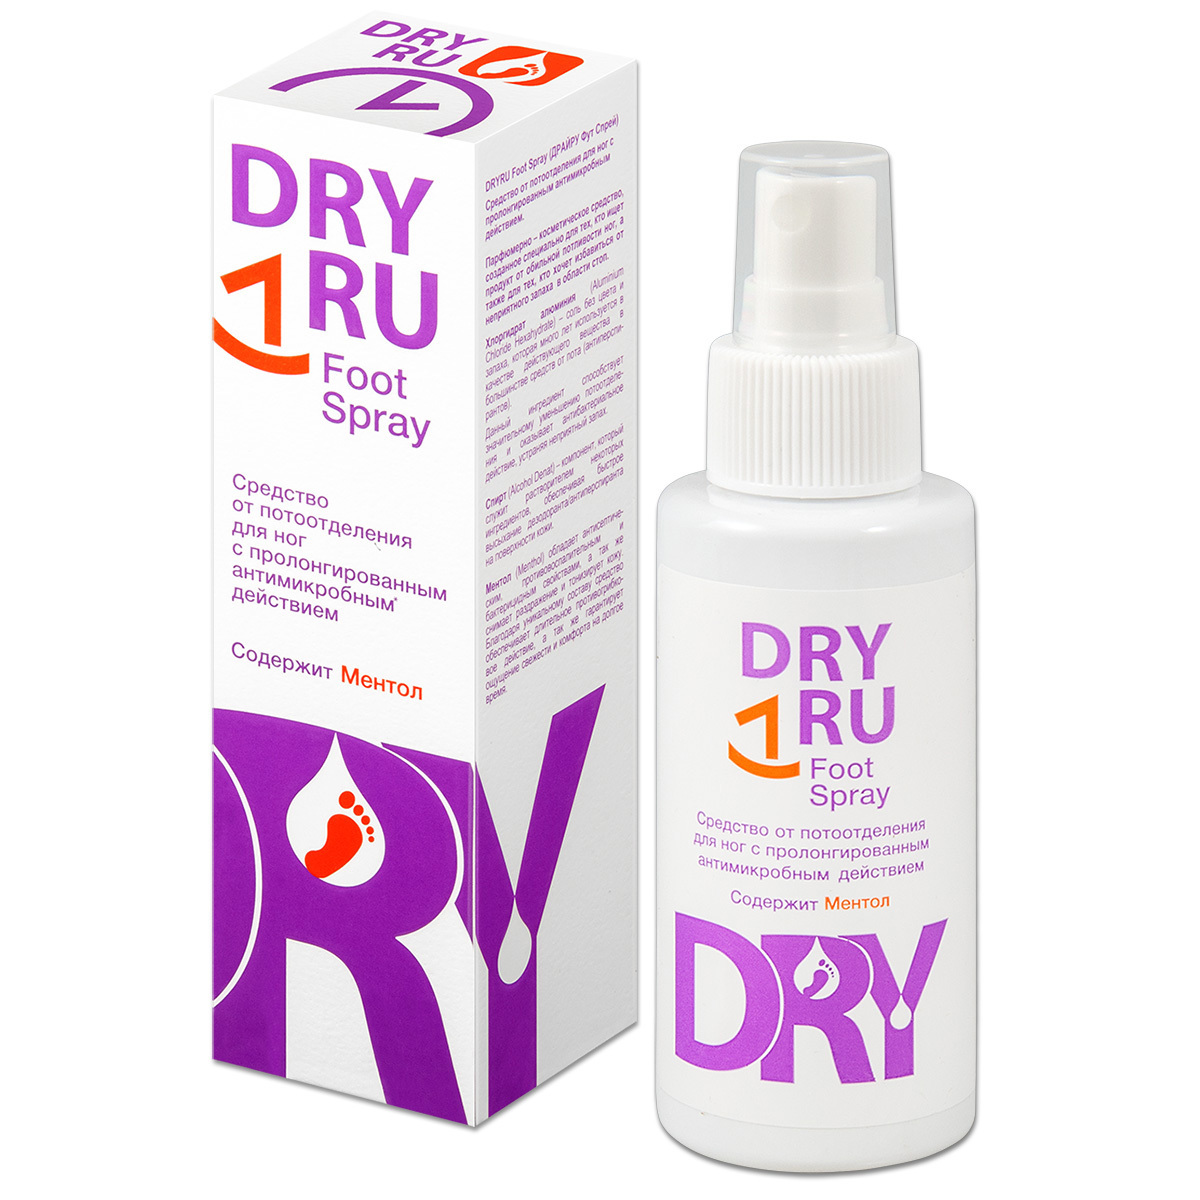 Спрей для ног foot. Драй драй для ног. Dry Dry foot Spray. Антиперспирант Dry ru foot Spray. Гель Dry ru 1 foot Spray.